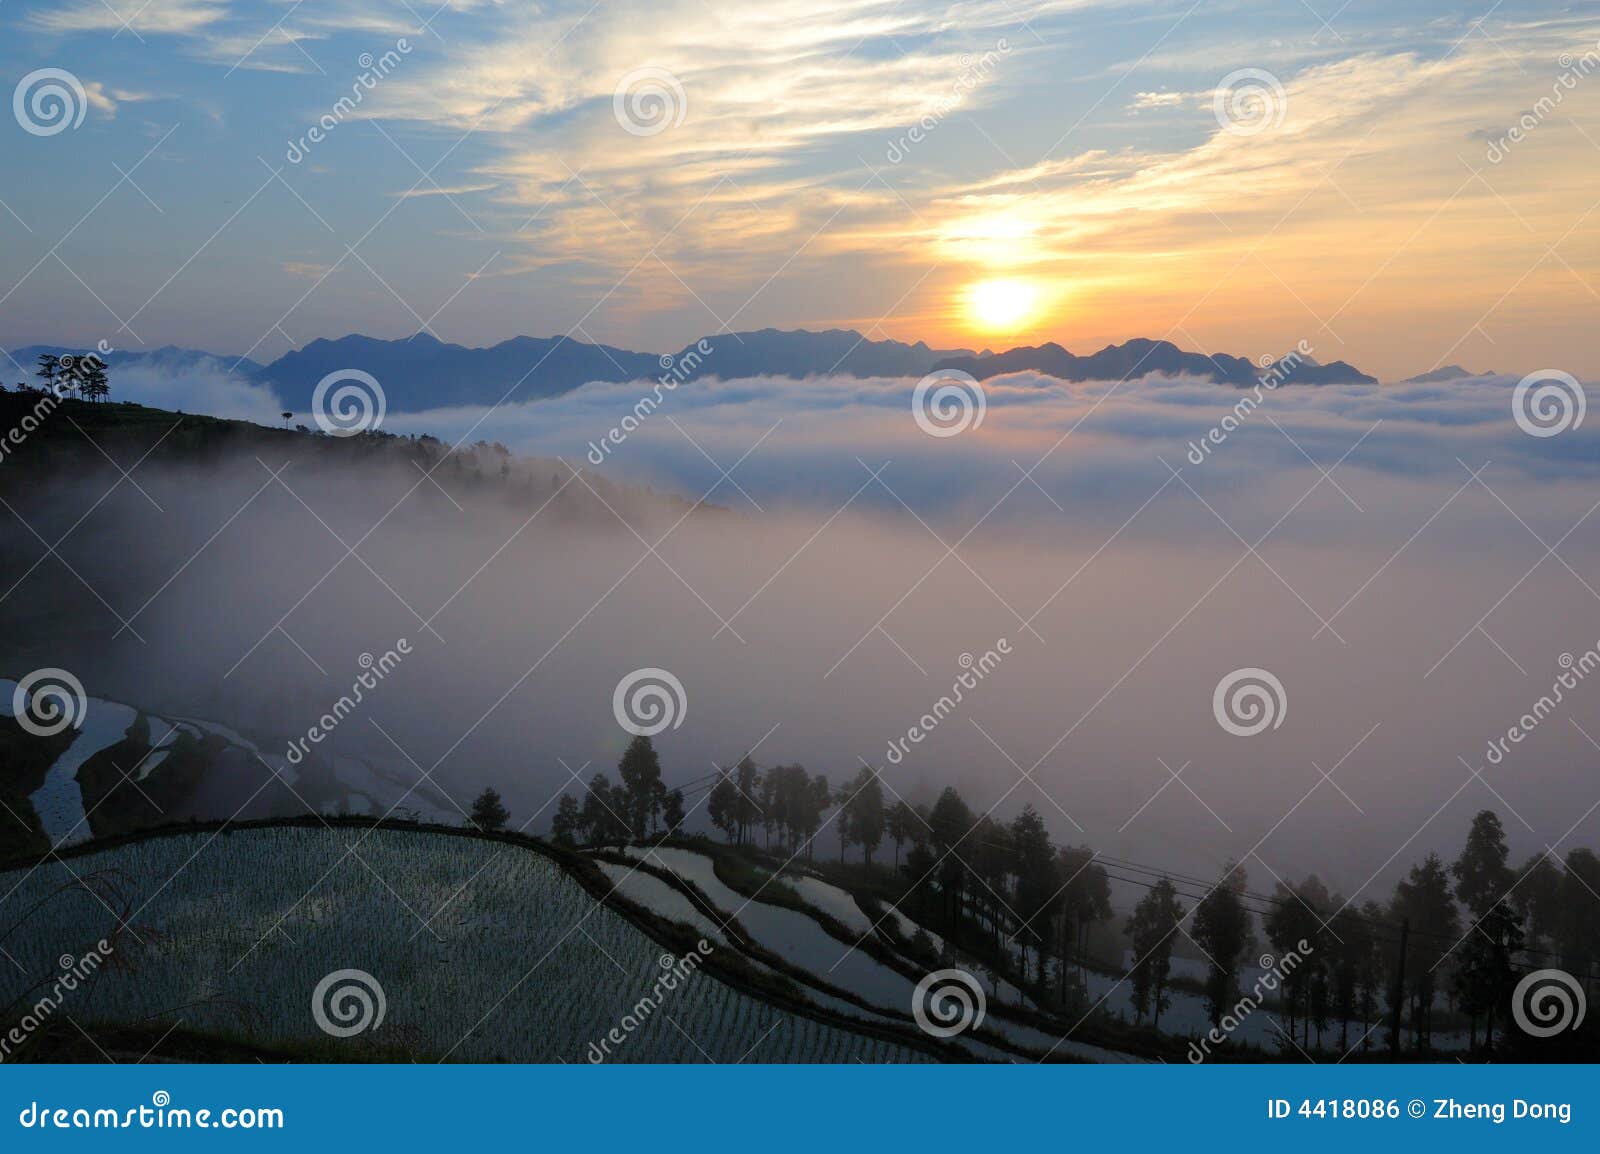 mingao terraced fields sunrise